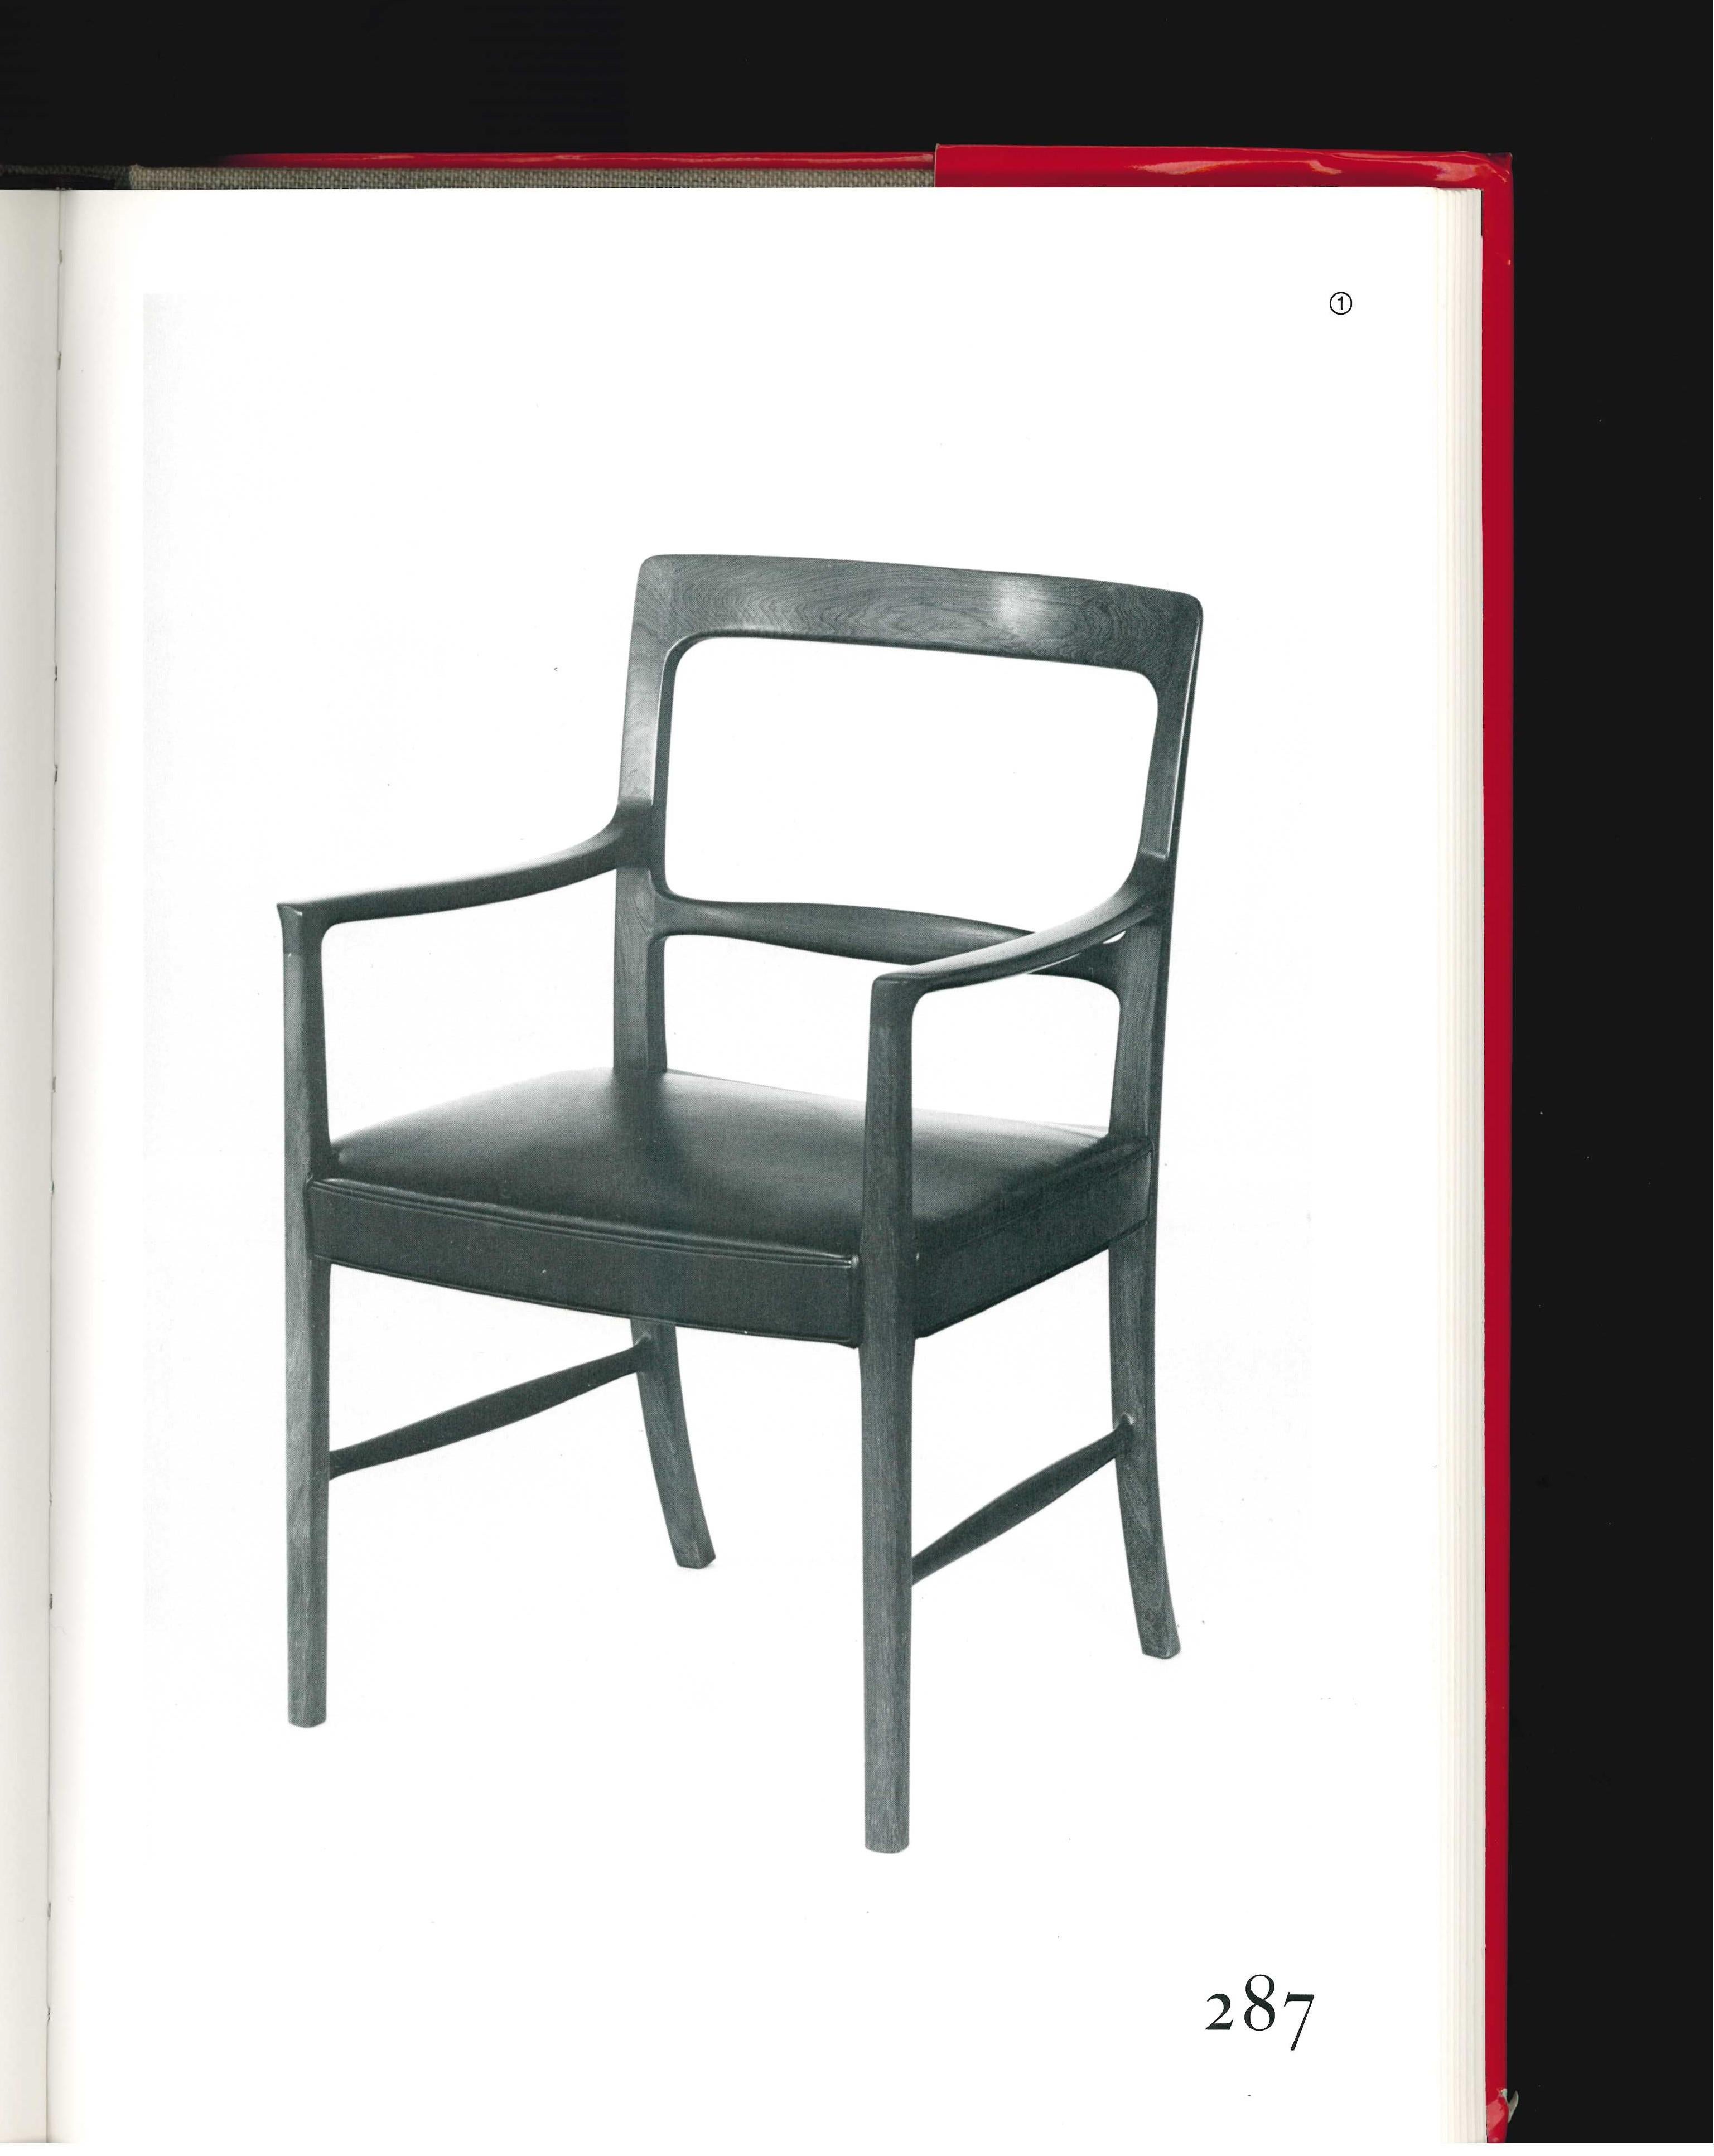 40 Years of Danish Furniture Design 1927-1966 par Greta Jalk (livre) en vente 3